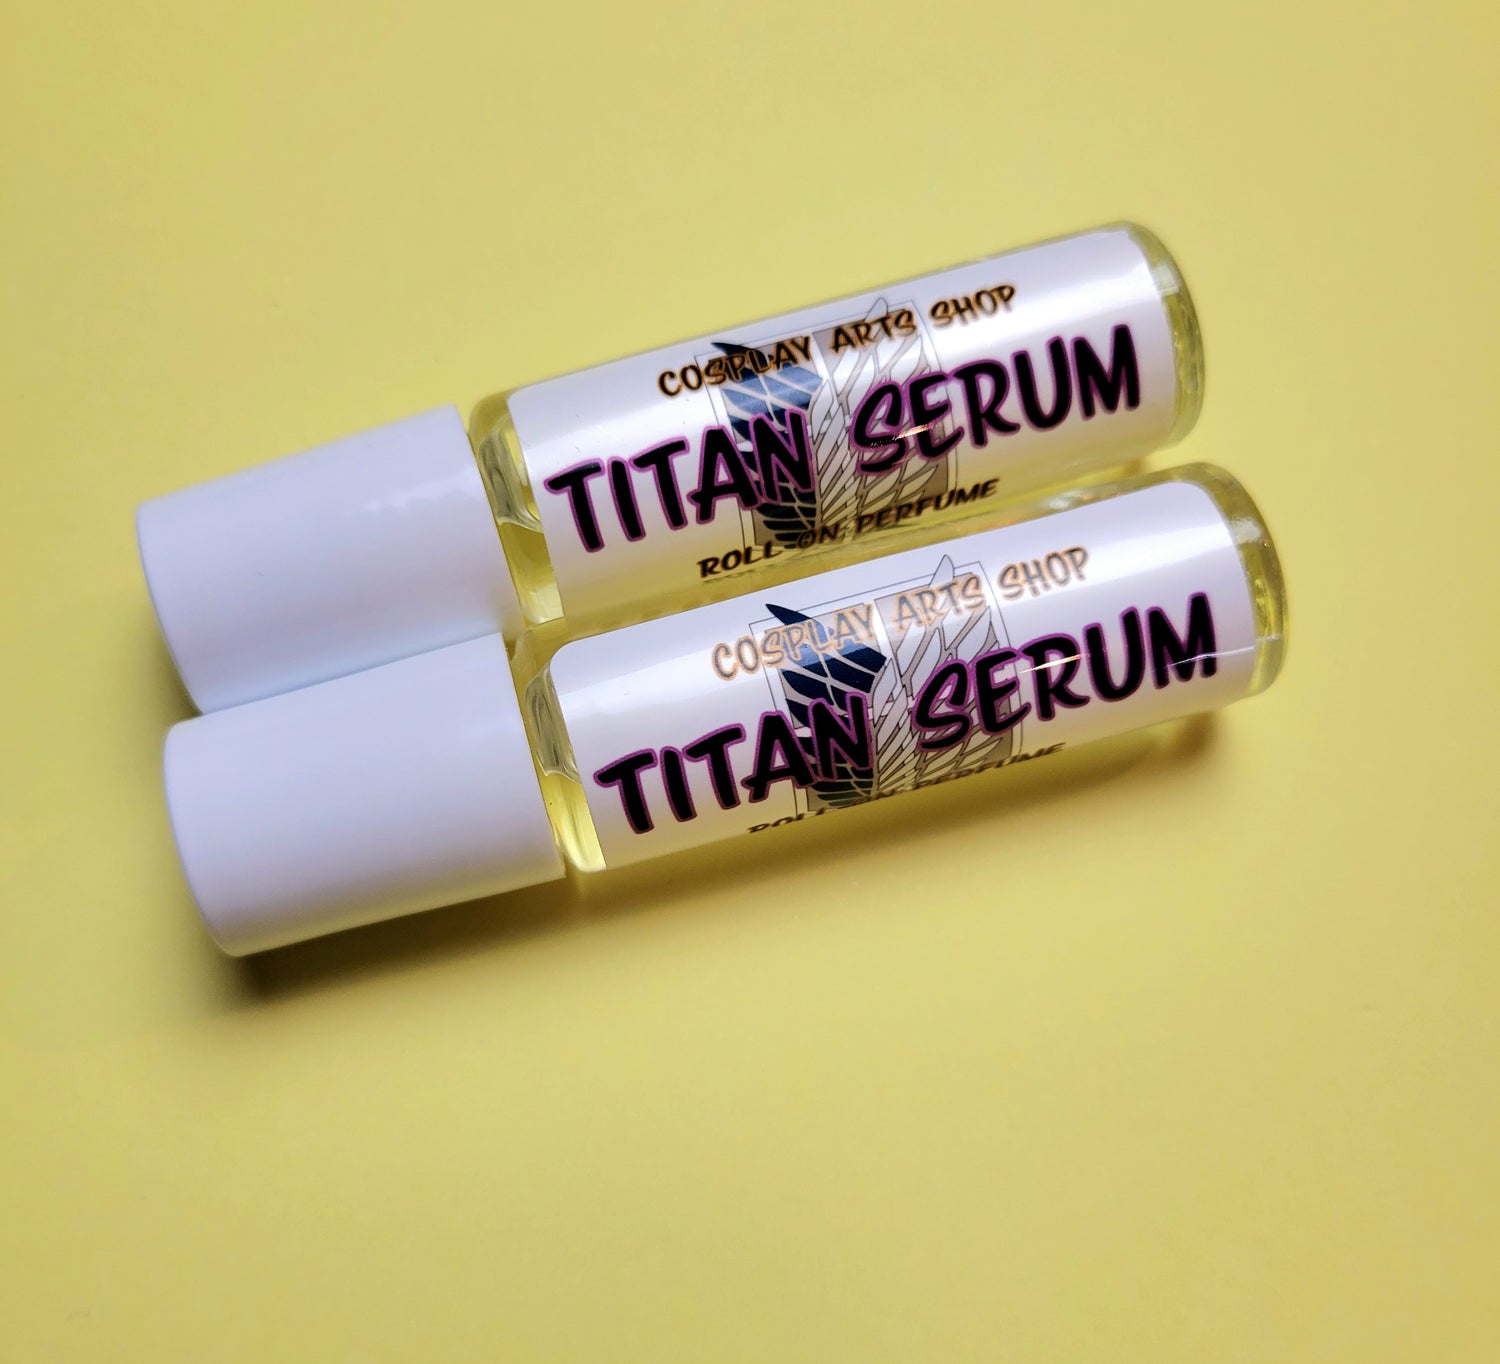 Titan Serum Roll On - Cosplay Arts Shop